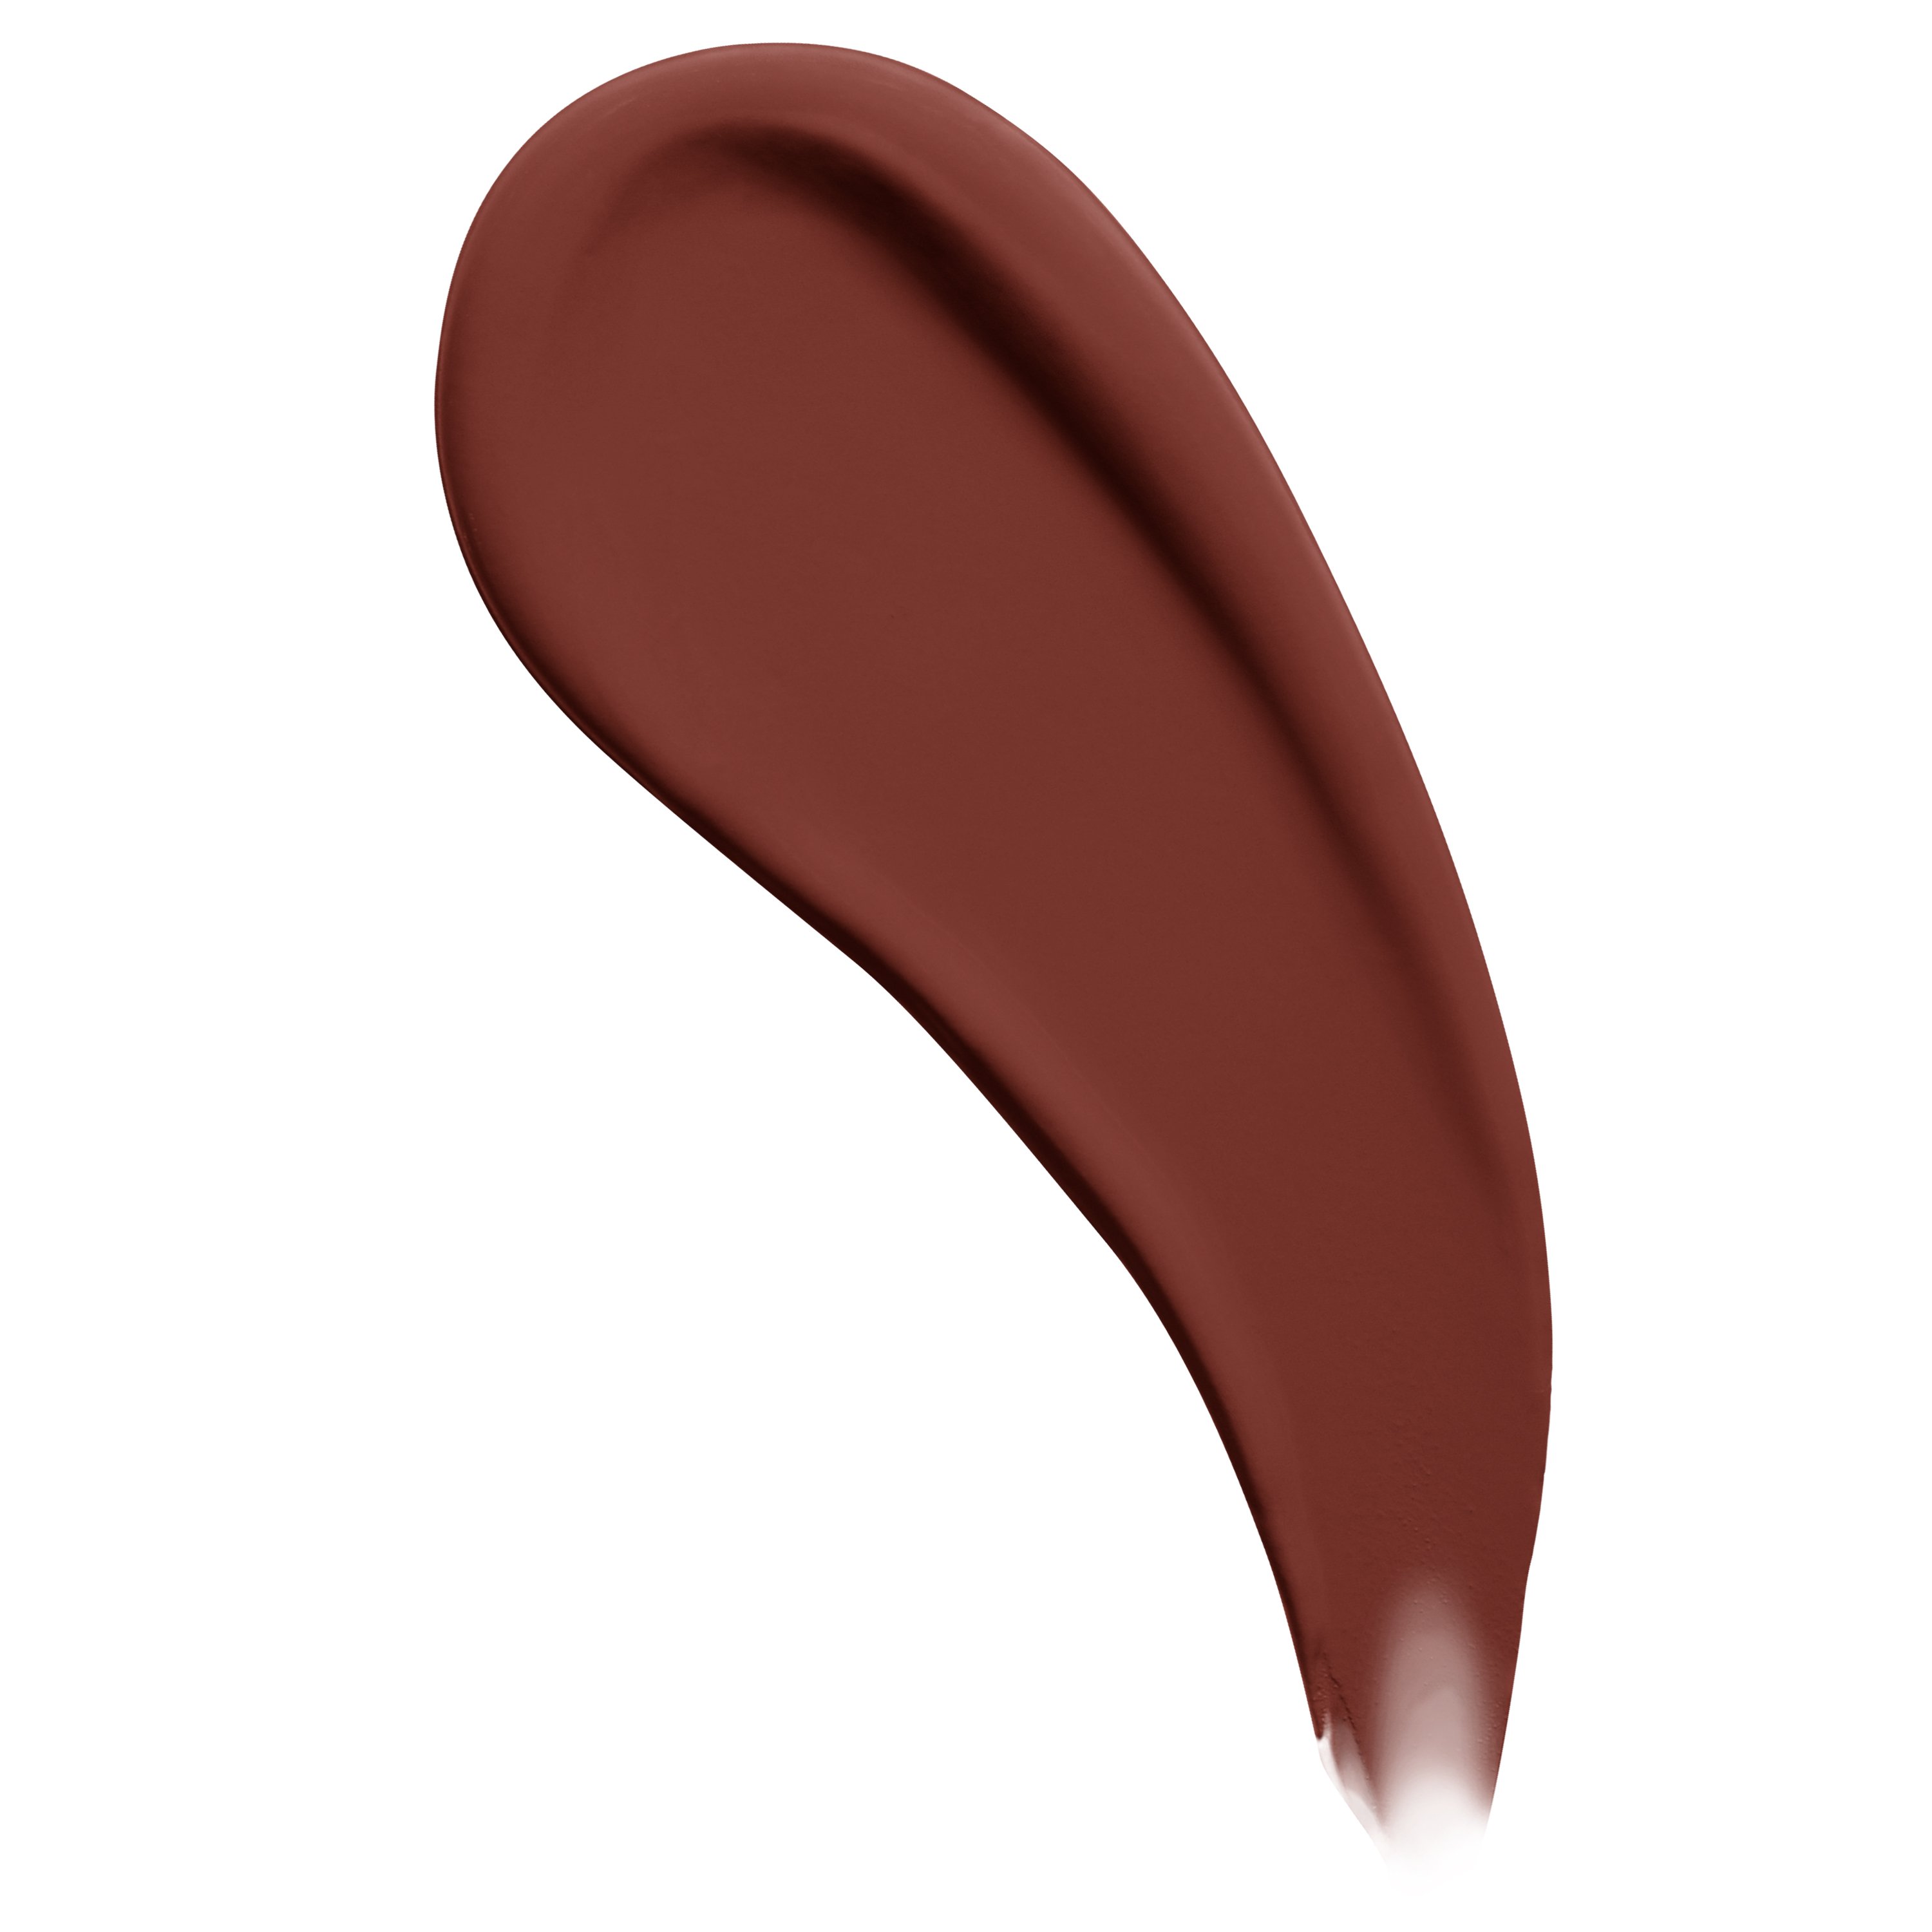 Nyx - Lip Lingerie XXL Matte Liquid Lipstick - Lowcut – H&B Beauty Store